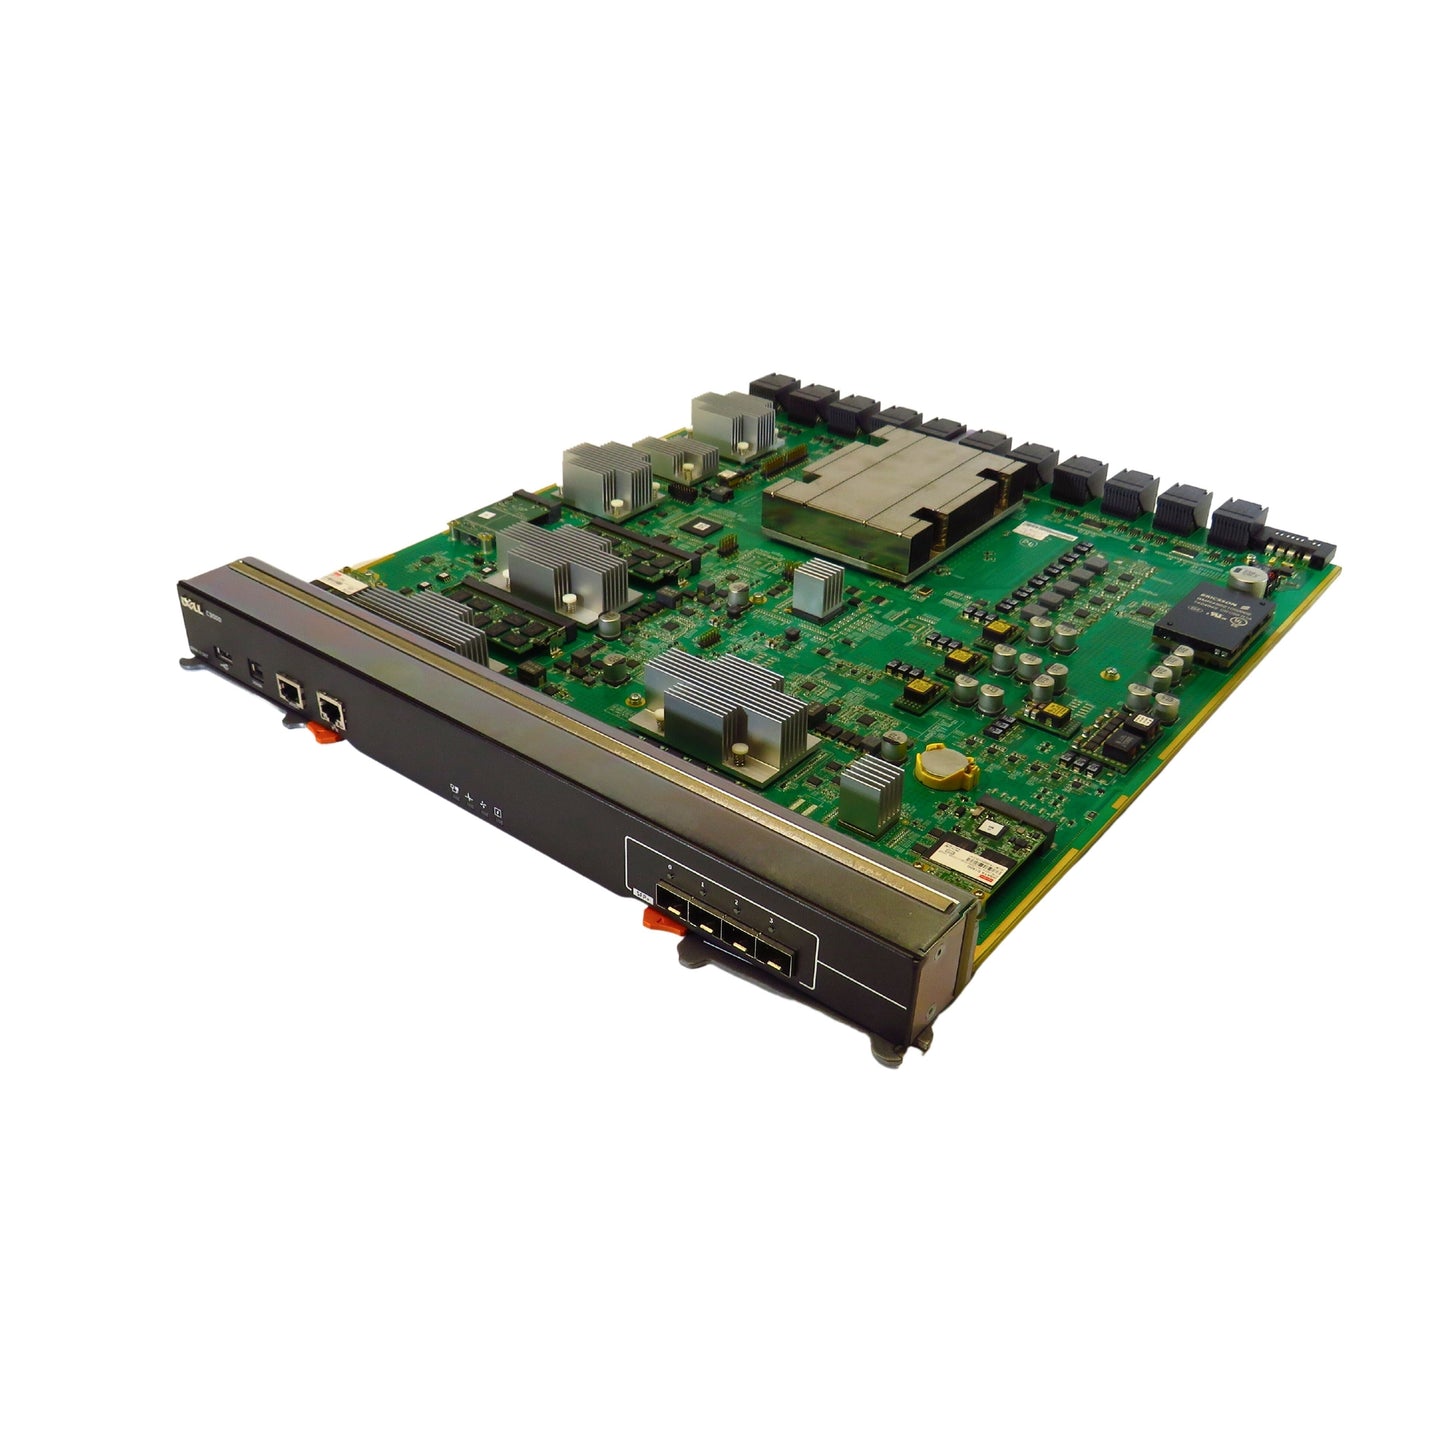 Dell 7KPC3 10 Gigabit Ethernet SFP+ C9000 Switch Route Processor Module (Refurbished)